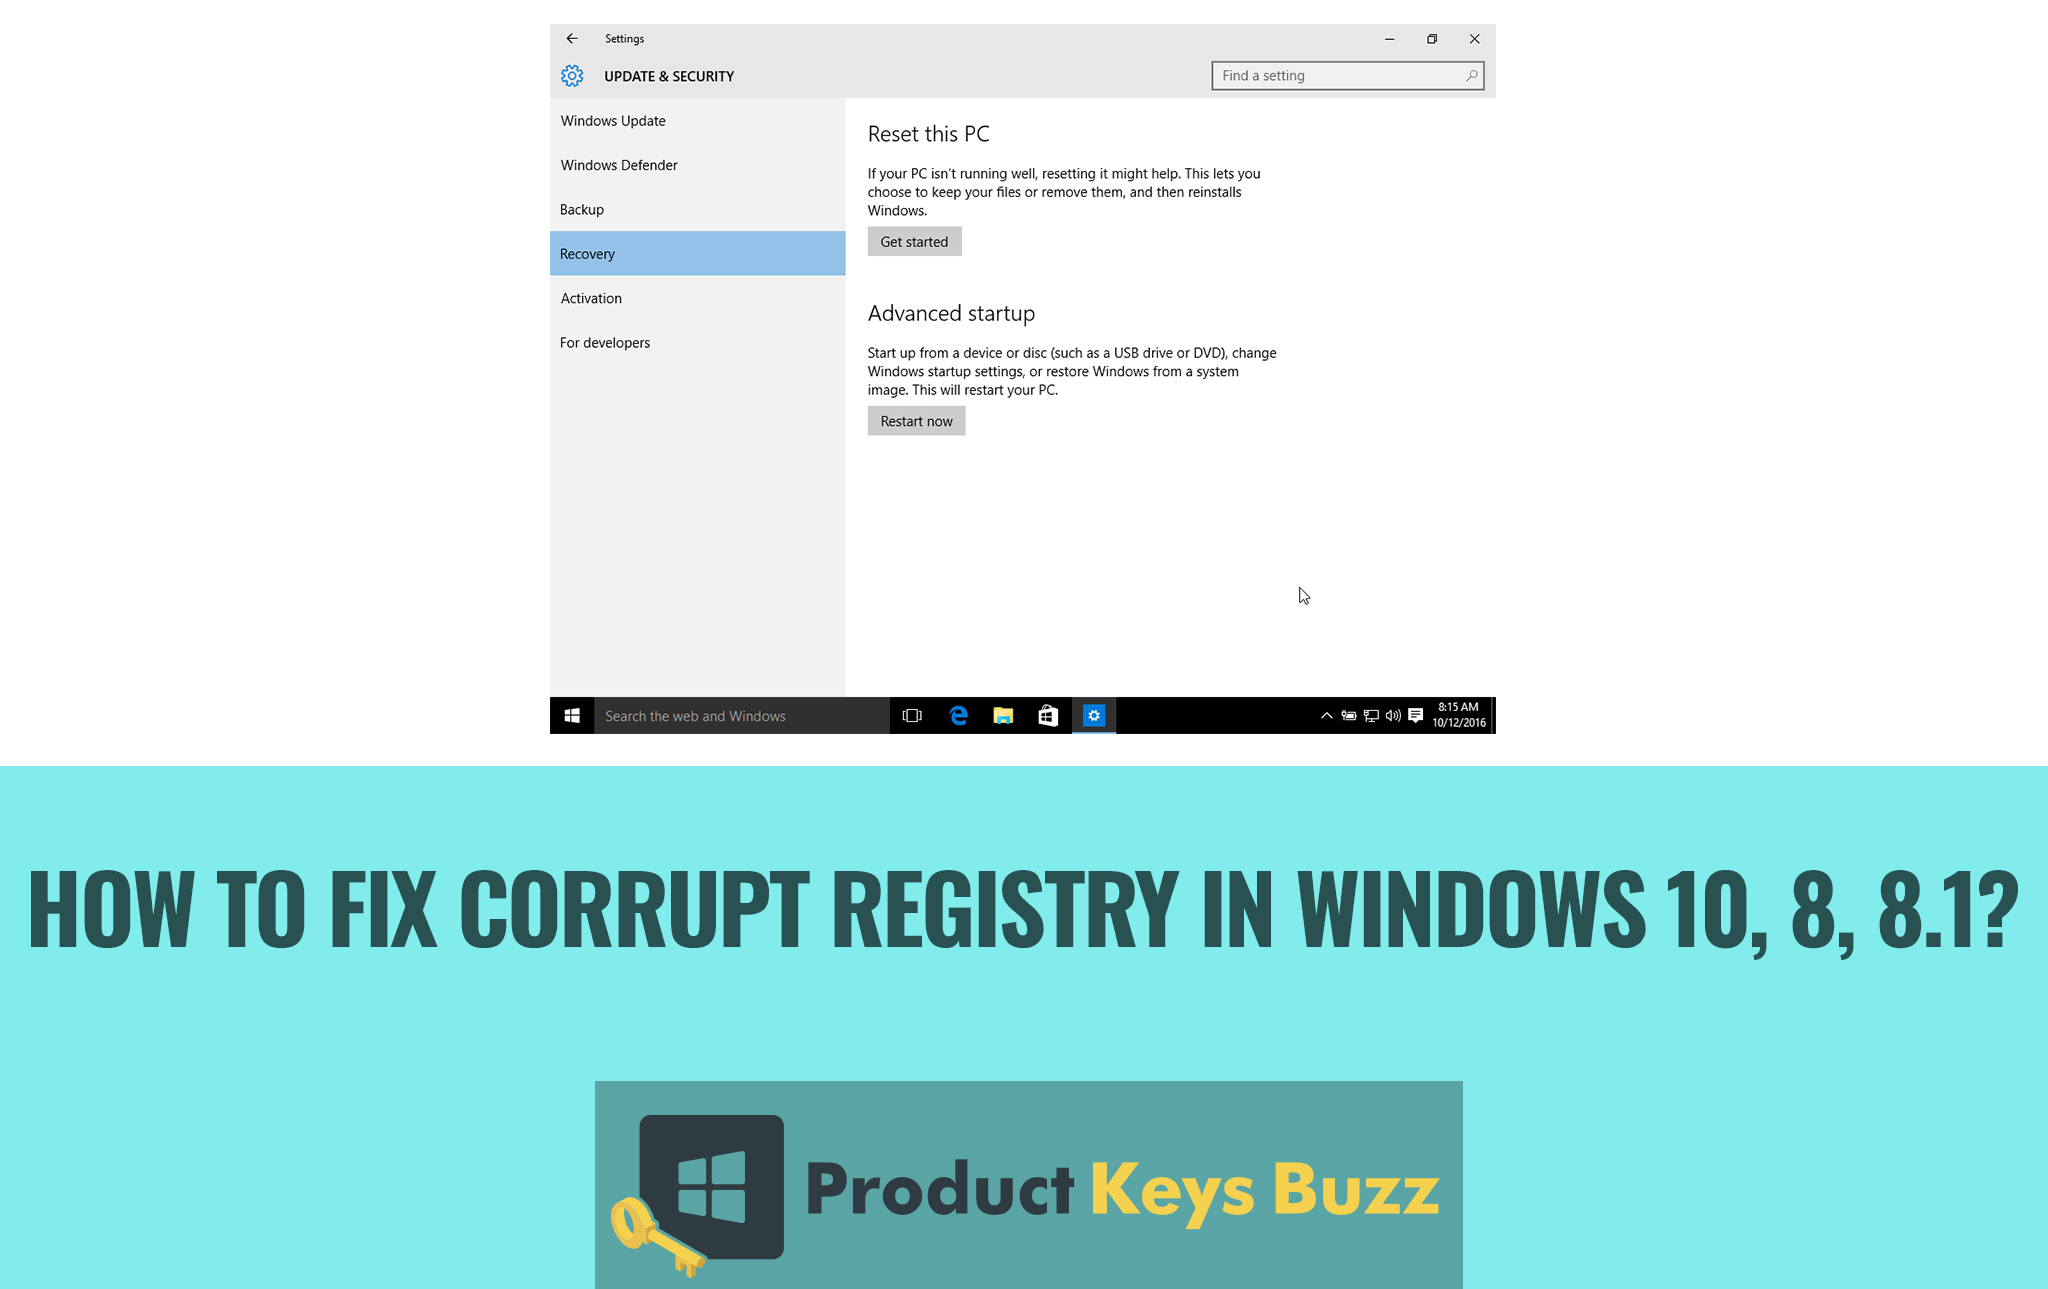 How to fix corrupt Registry in Windows 10, 8, 8.1?